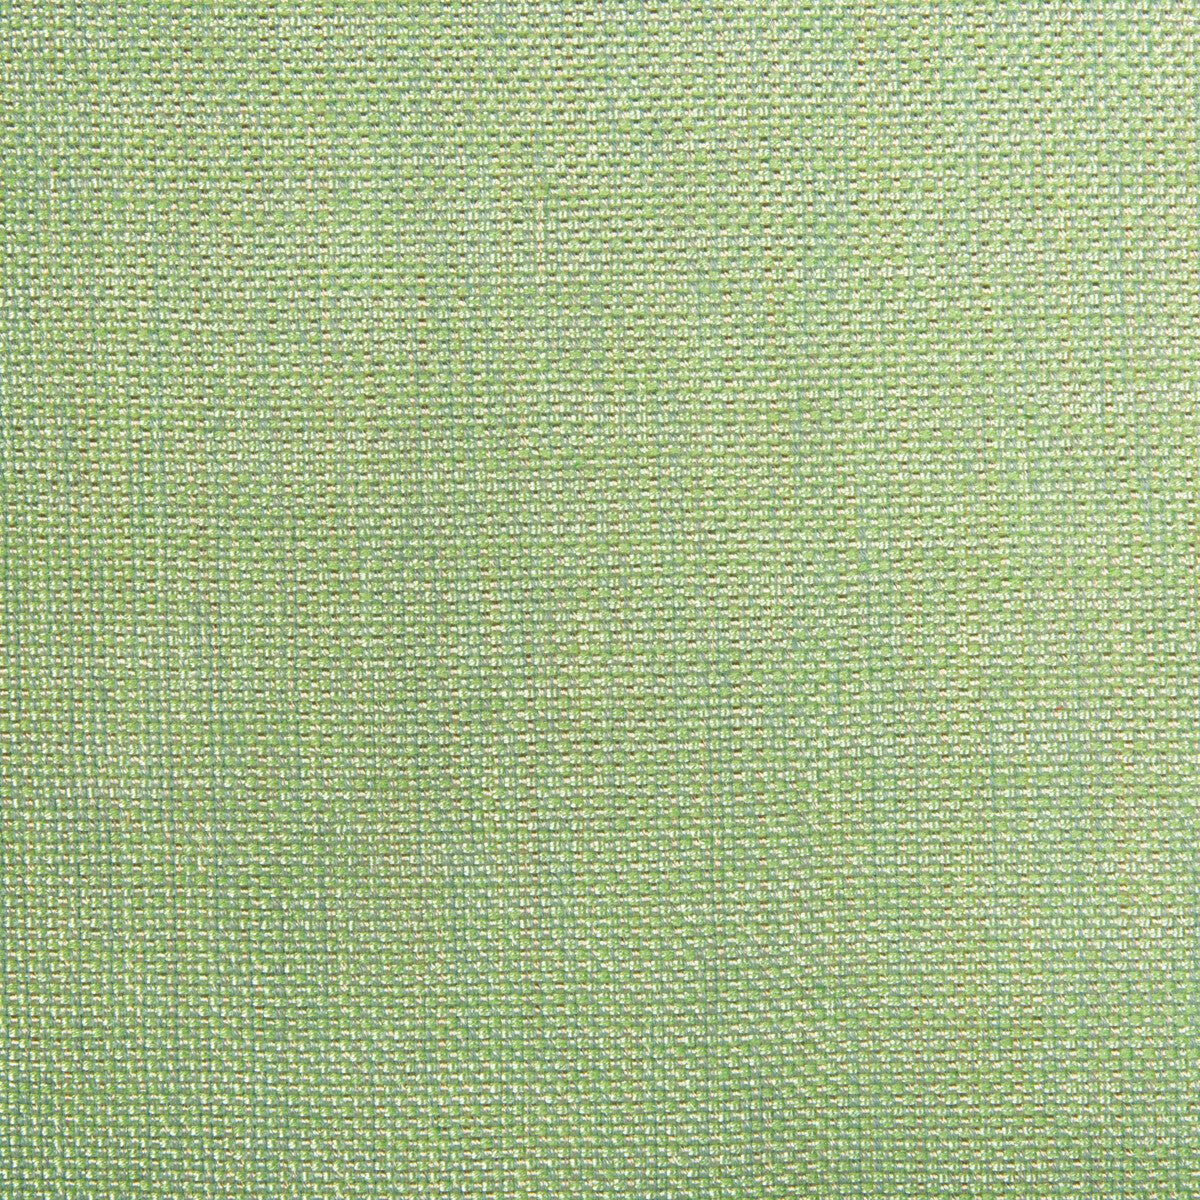 Kravet Smart fabric in 34939-123 color - pattern 34939.123.0 - by Kravet Smart